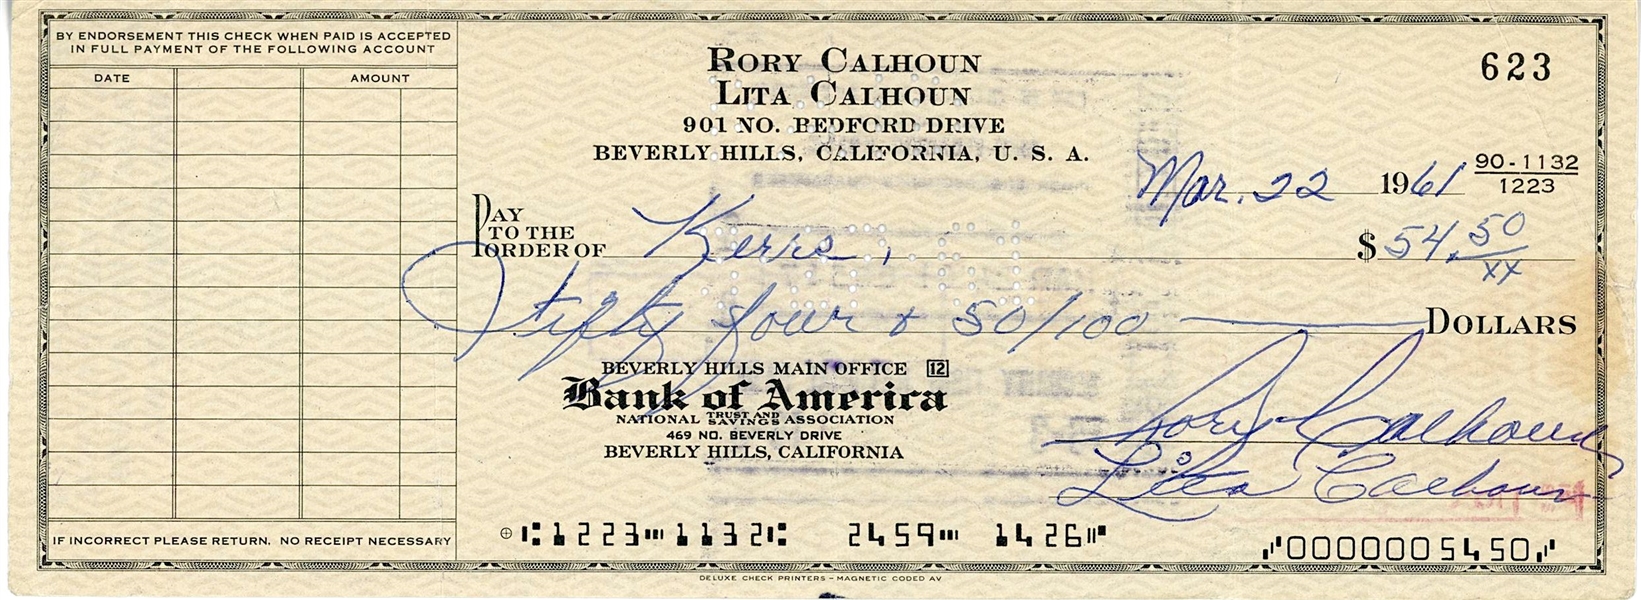 Rory Calhoun Signed Check (PSA Authentication) 